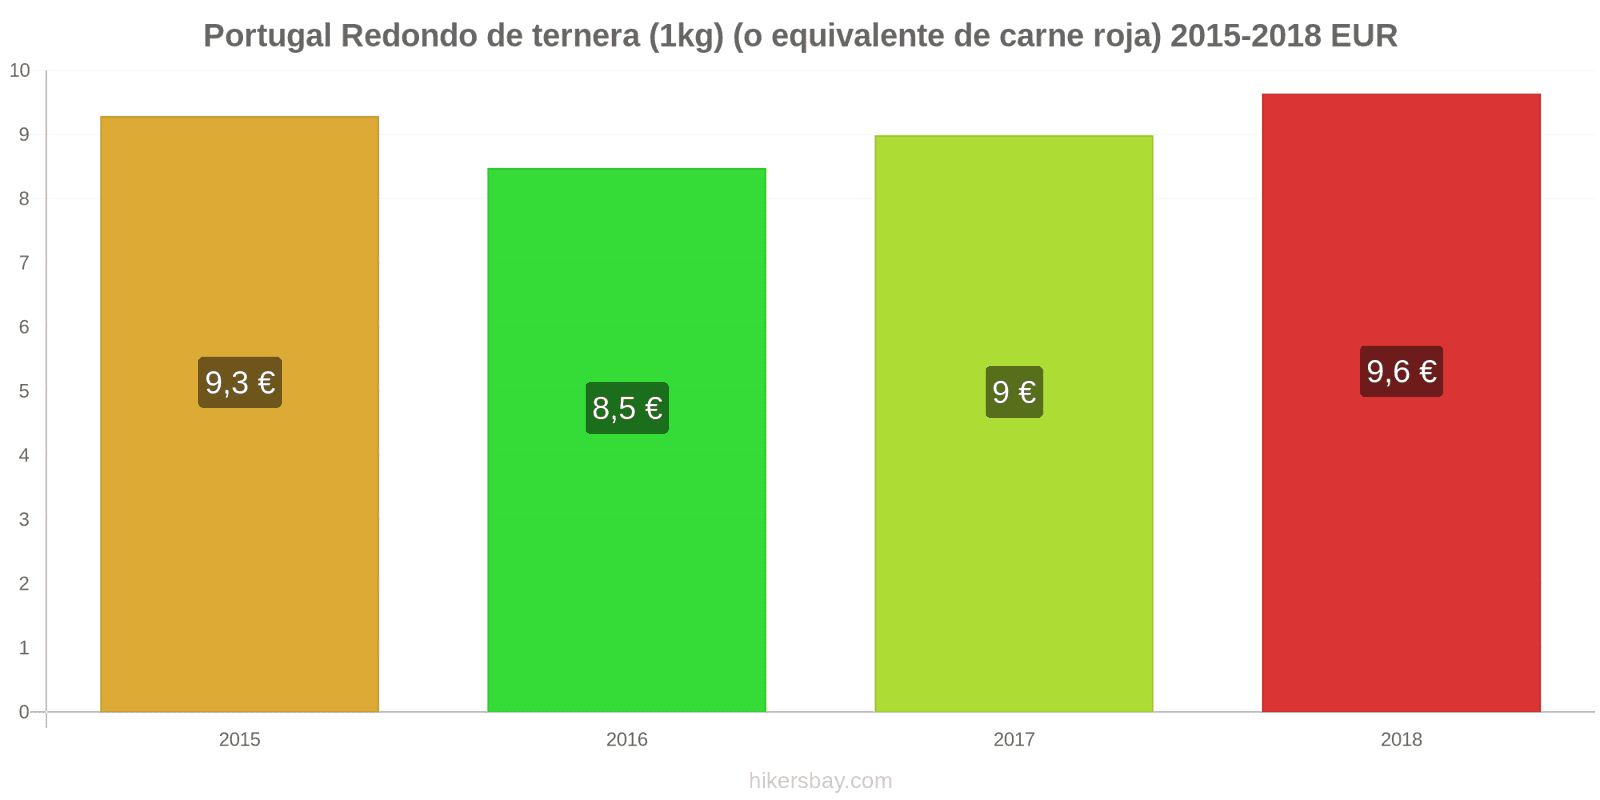 Portugal cambios de precios Carne de res (1kg) (o carne roja similar) hikersbay.com